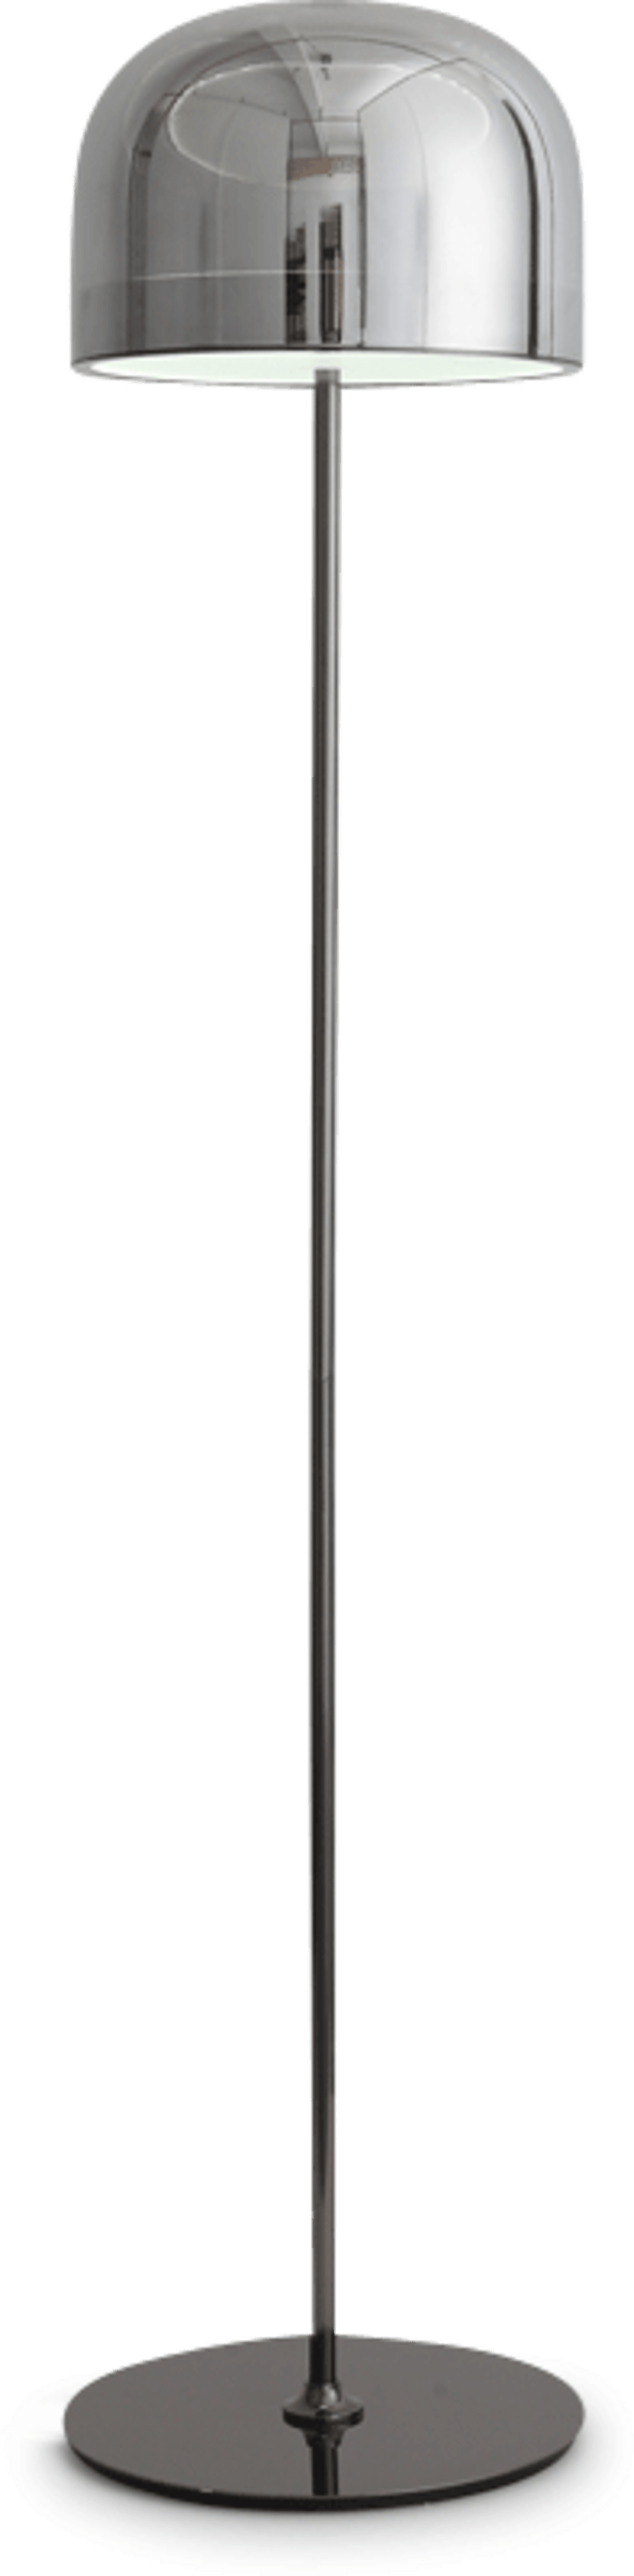 Equatore Style Floor Lamp  Pearl Black/Large image.